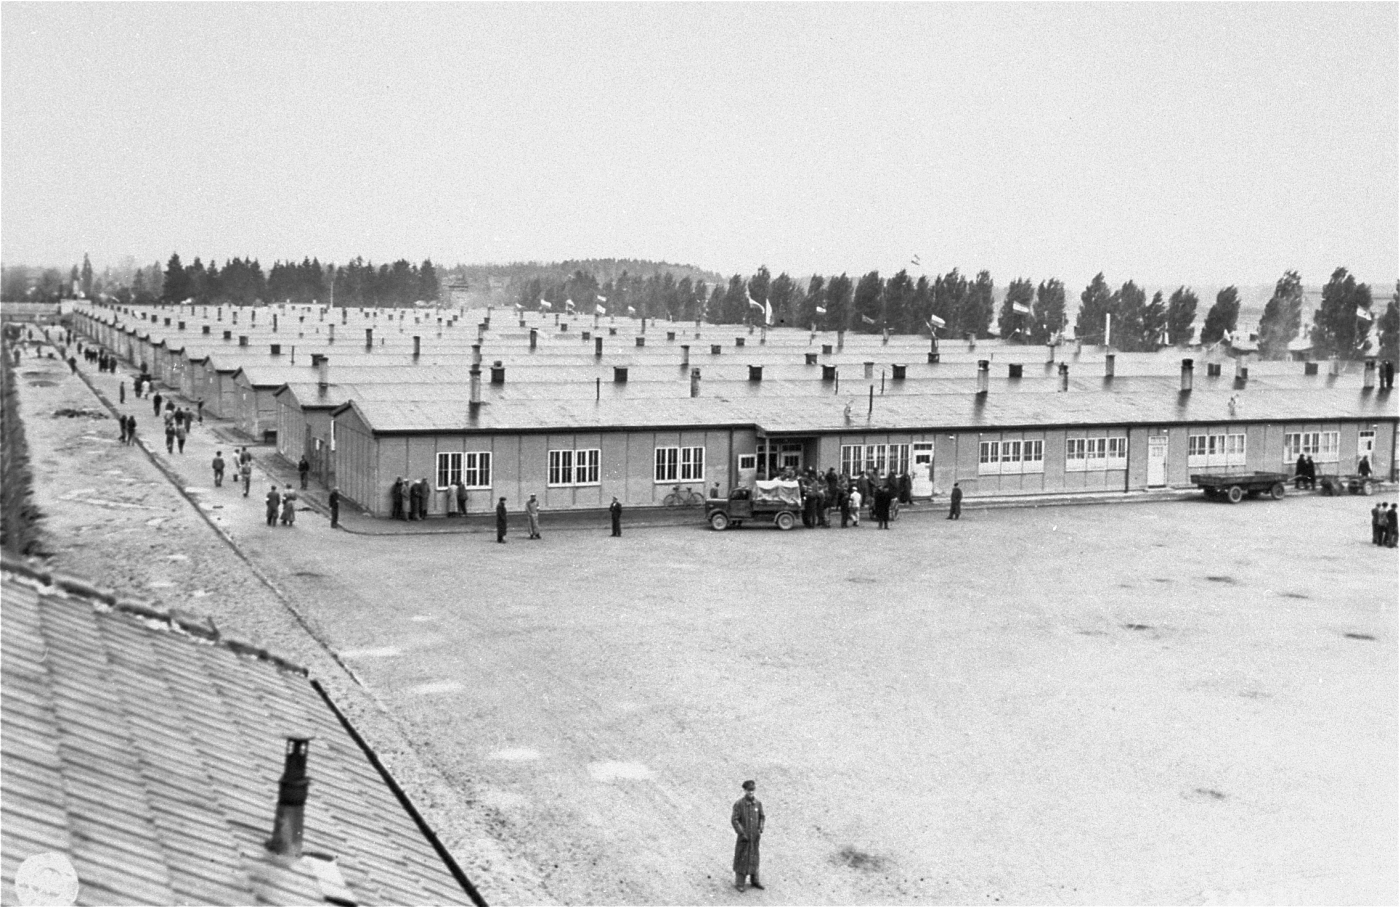 Prisoners' barracks, Dachau Concentration Camp, Germany, 3 May 1945